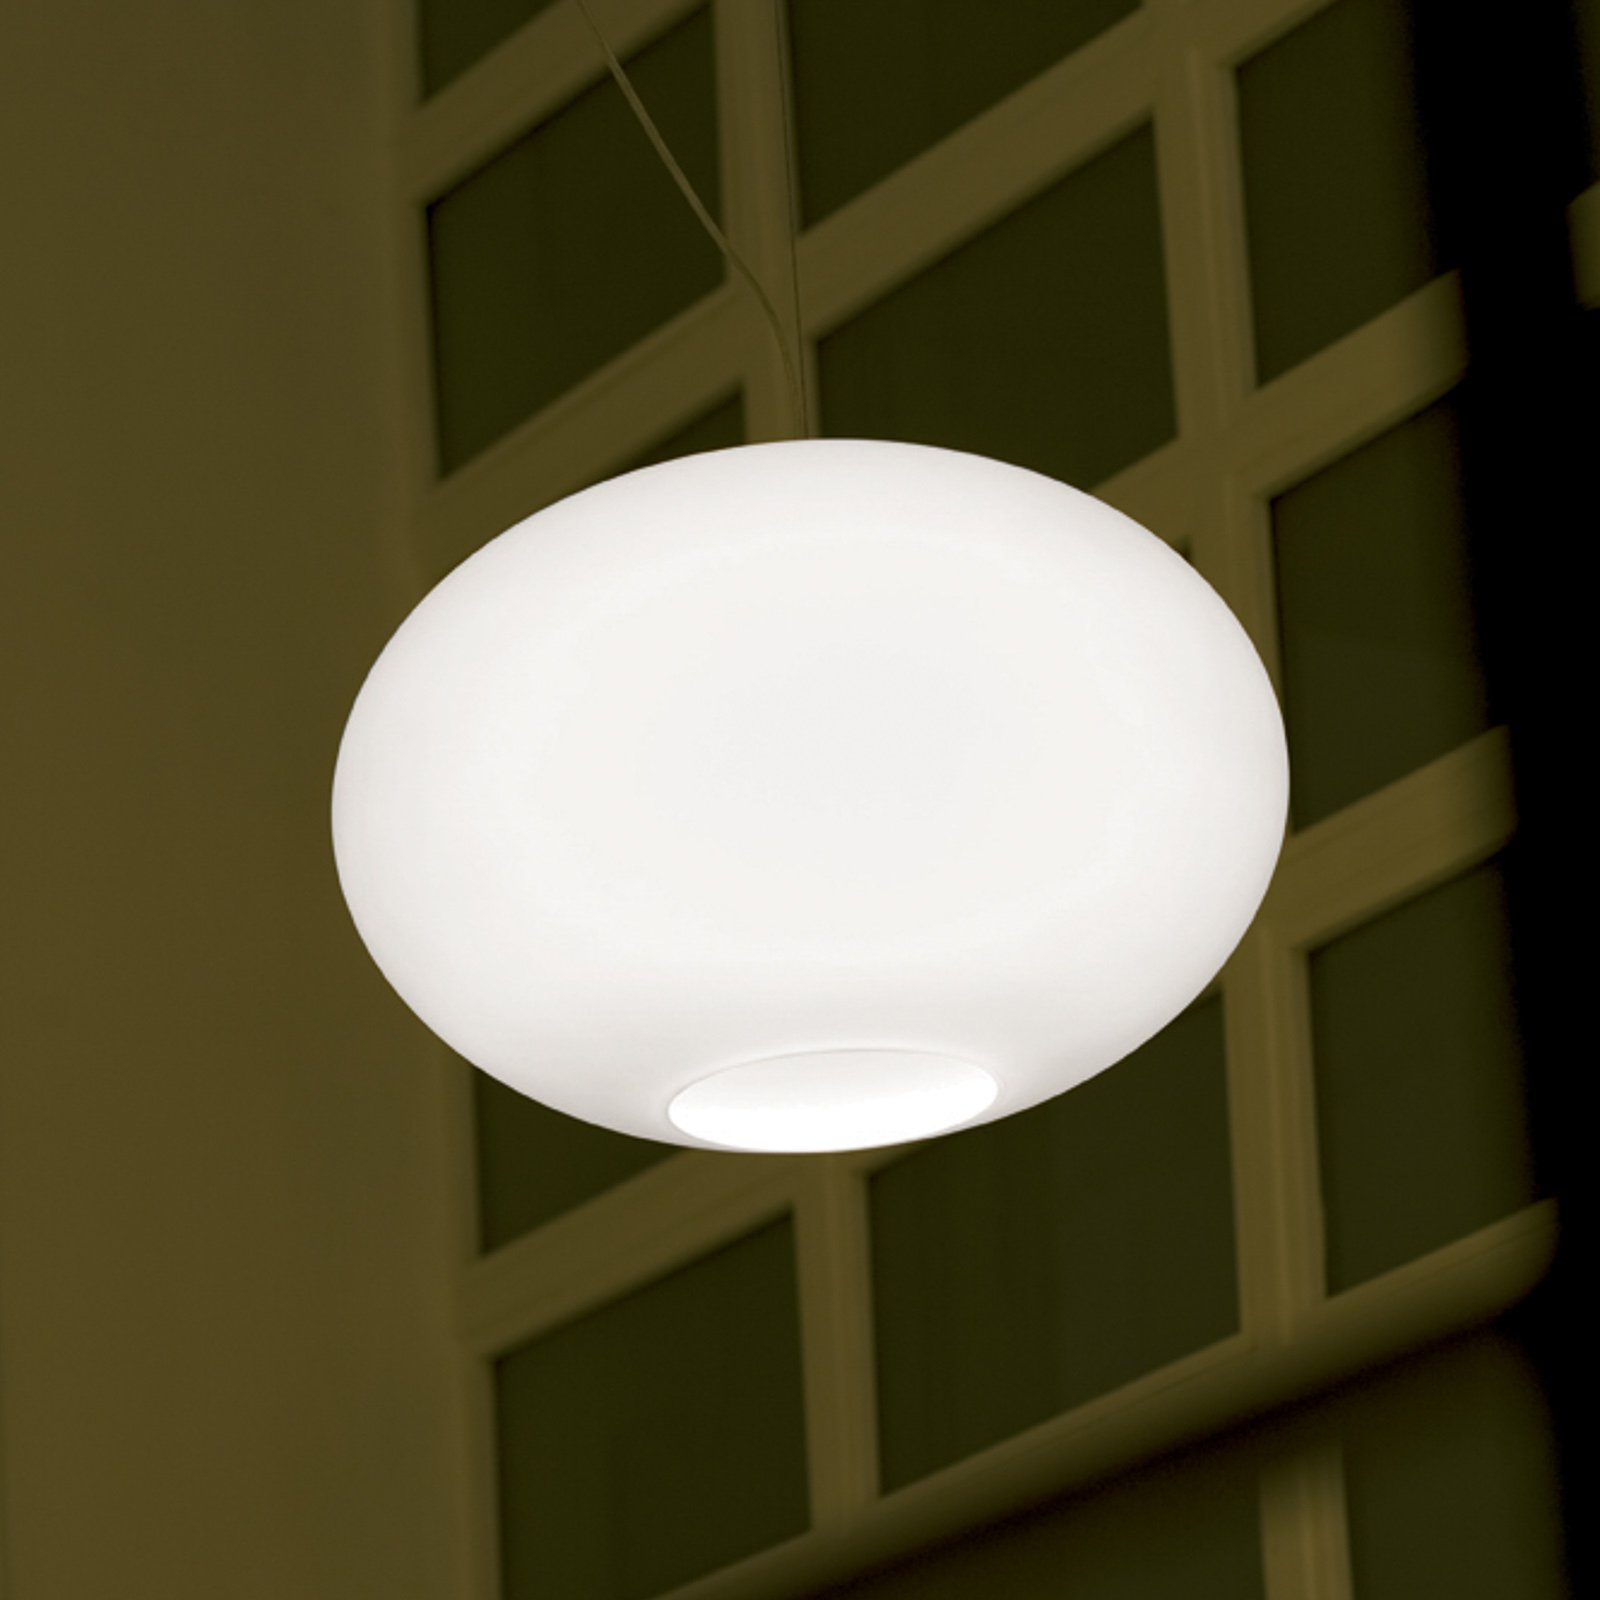 Prandina Zero S7 hanging light, opal glass Ø 45 cm